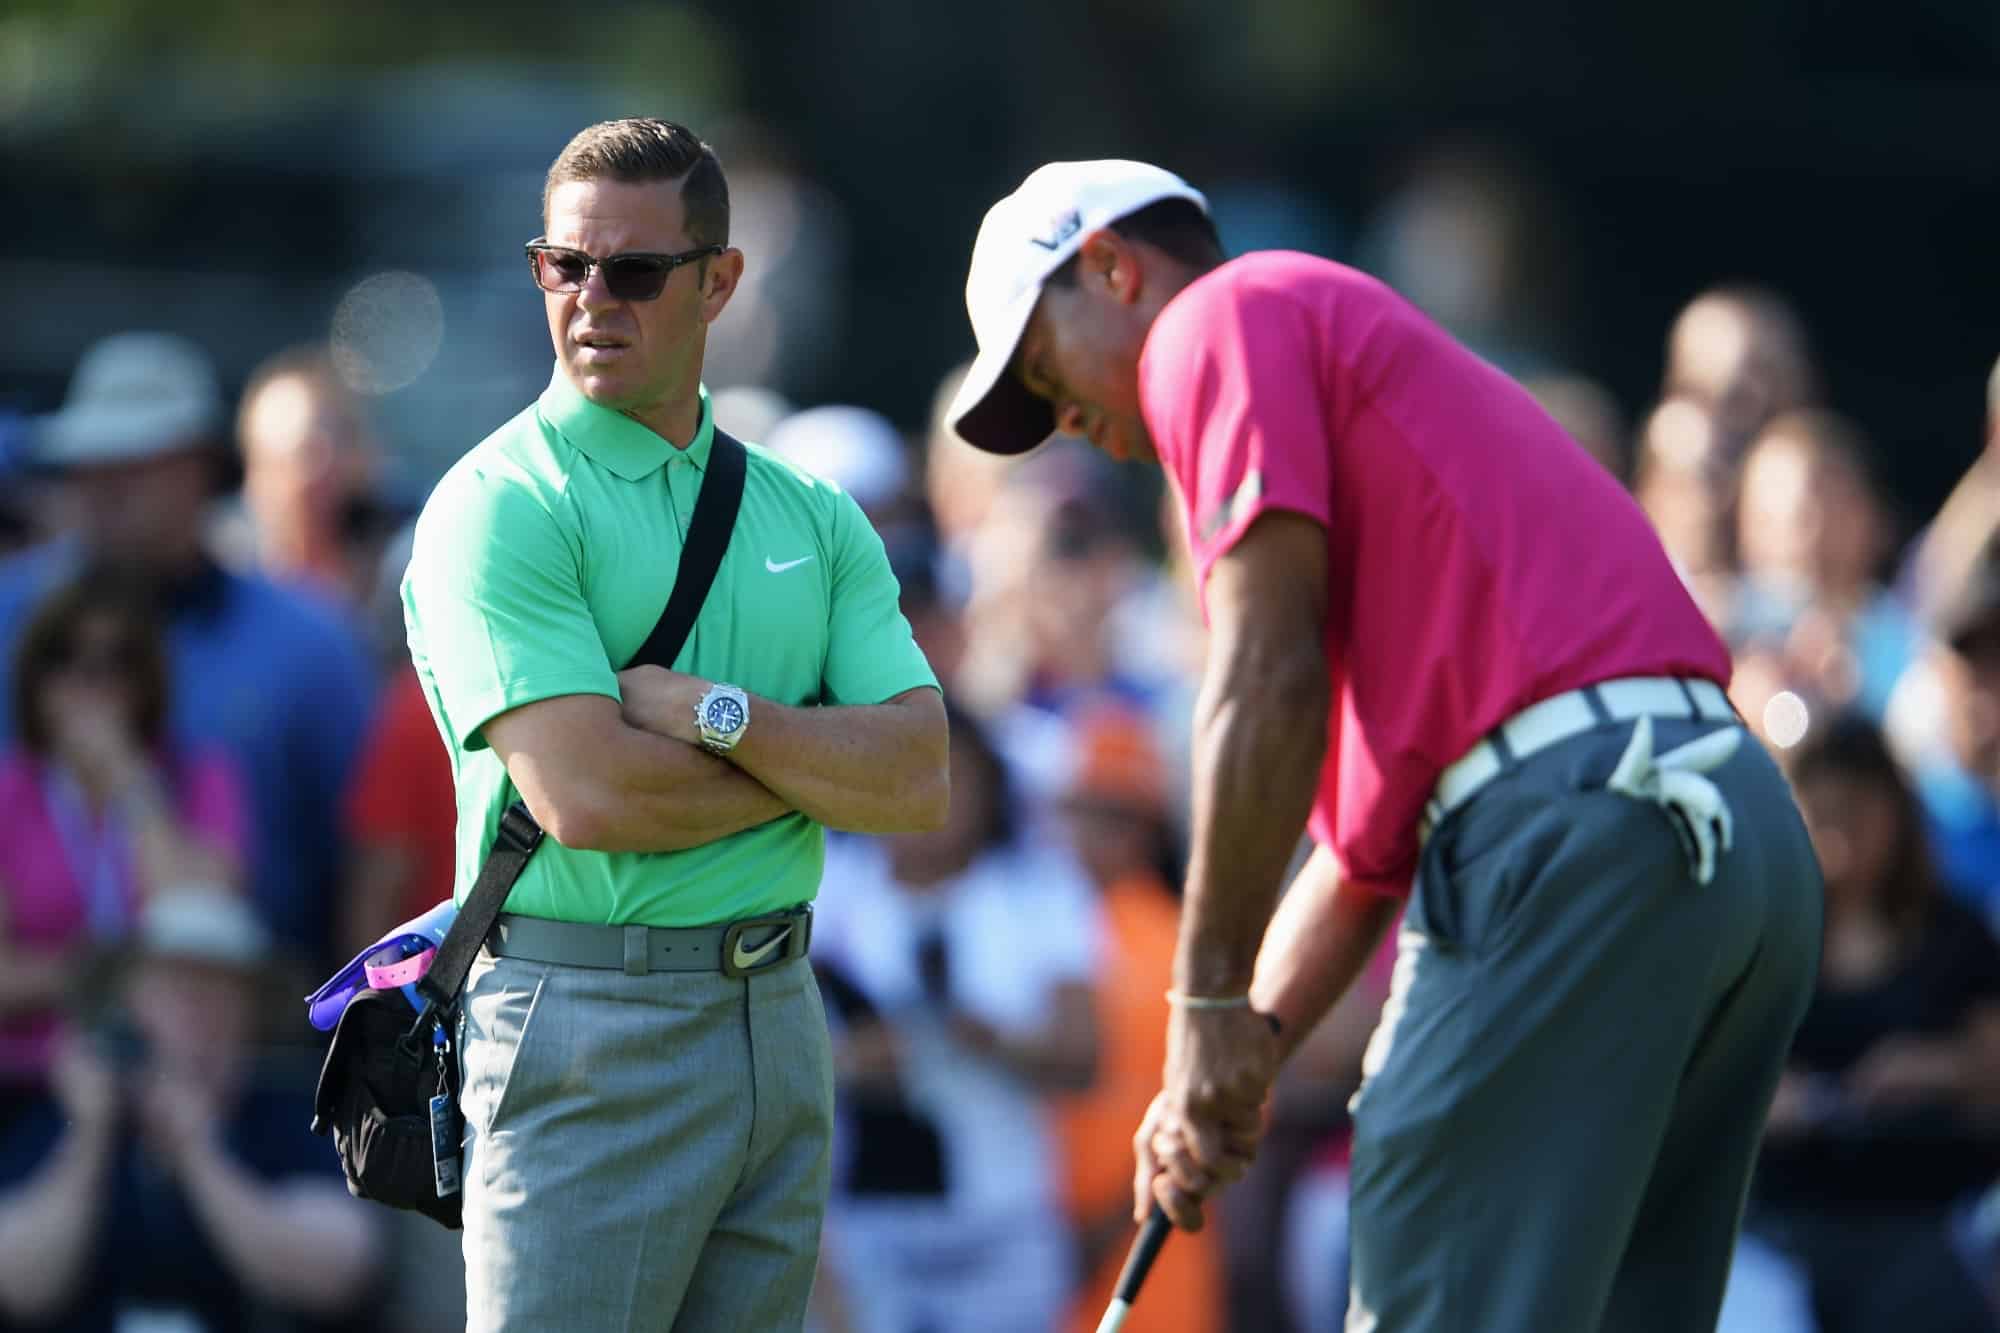 Sean Foley Tiger Woods is main reason for large PGA Tour purses